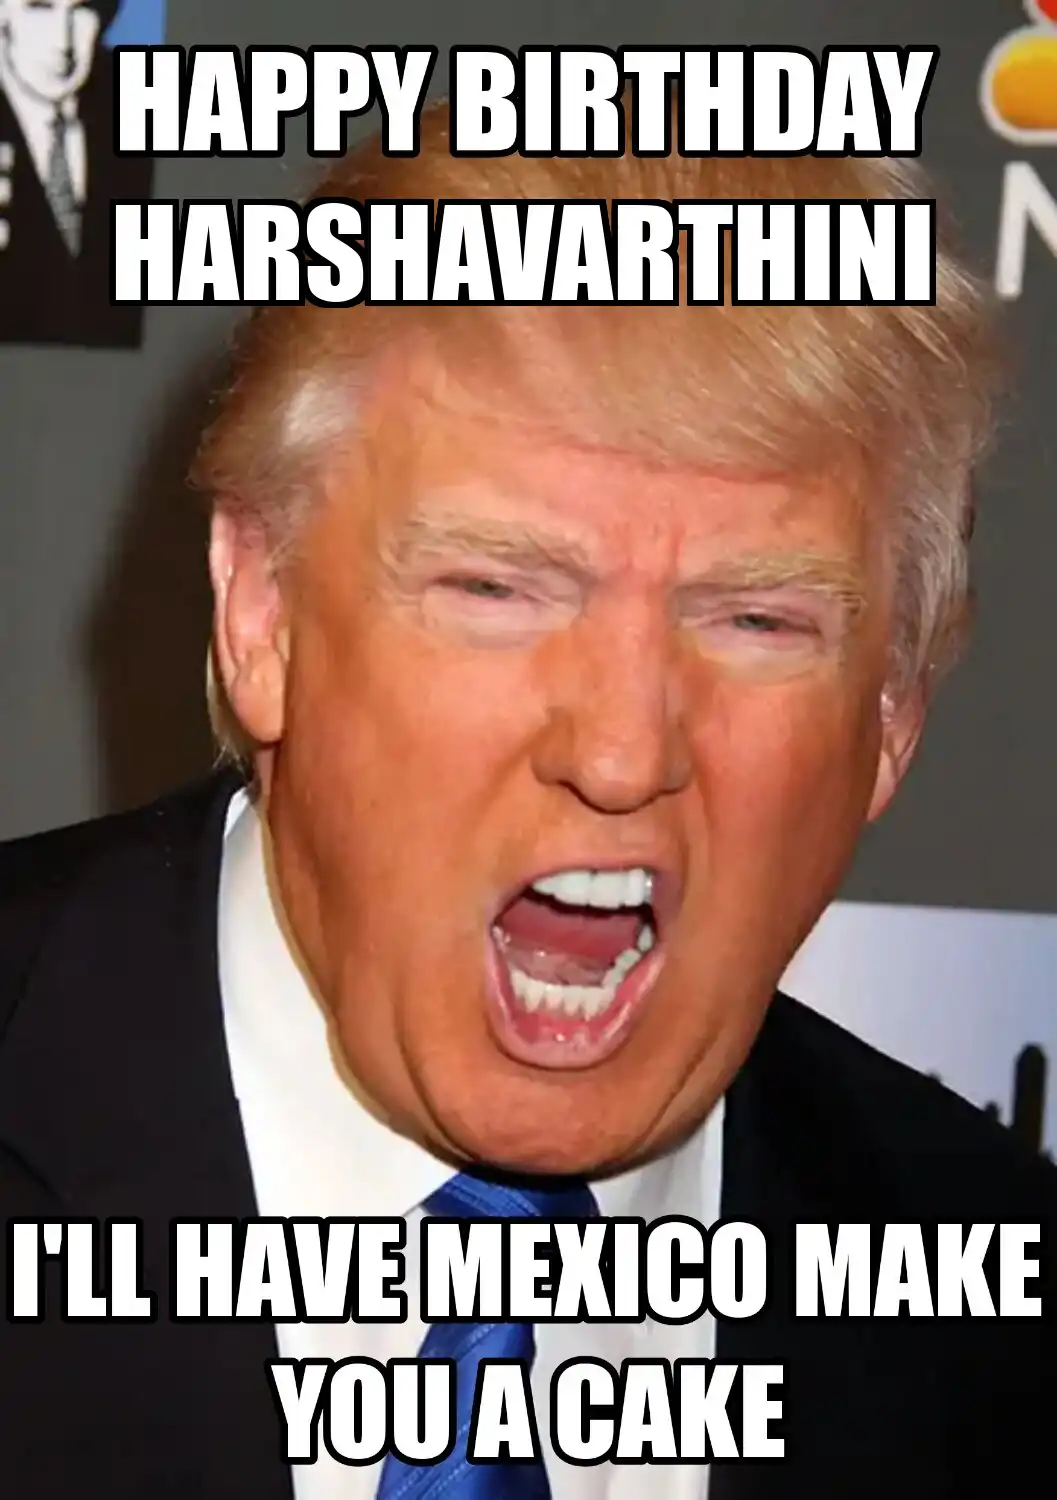 Happy Birthday Harshavarthini Mexico Make You A Cake Meme